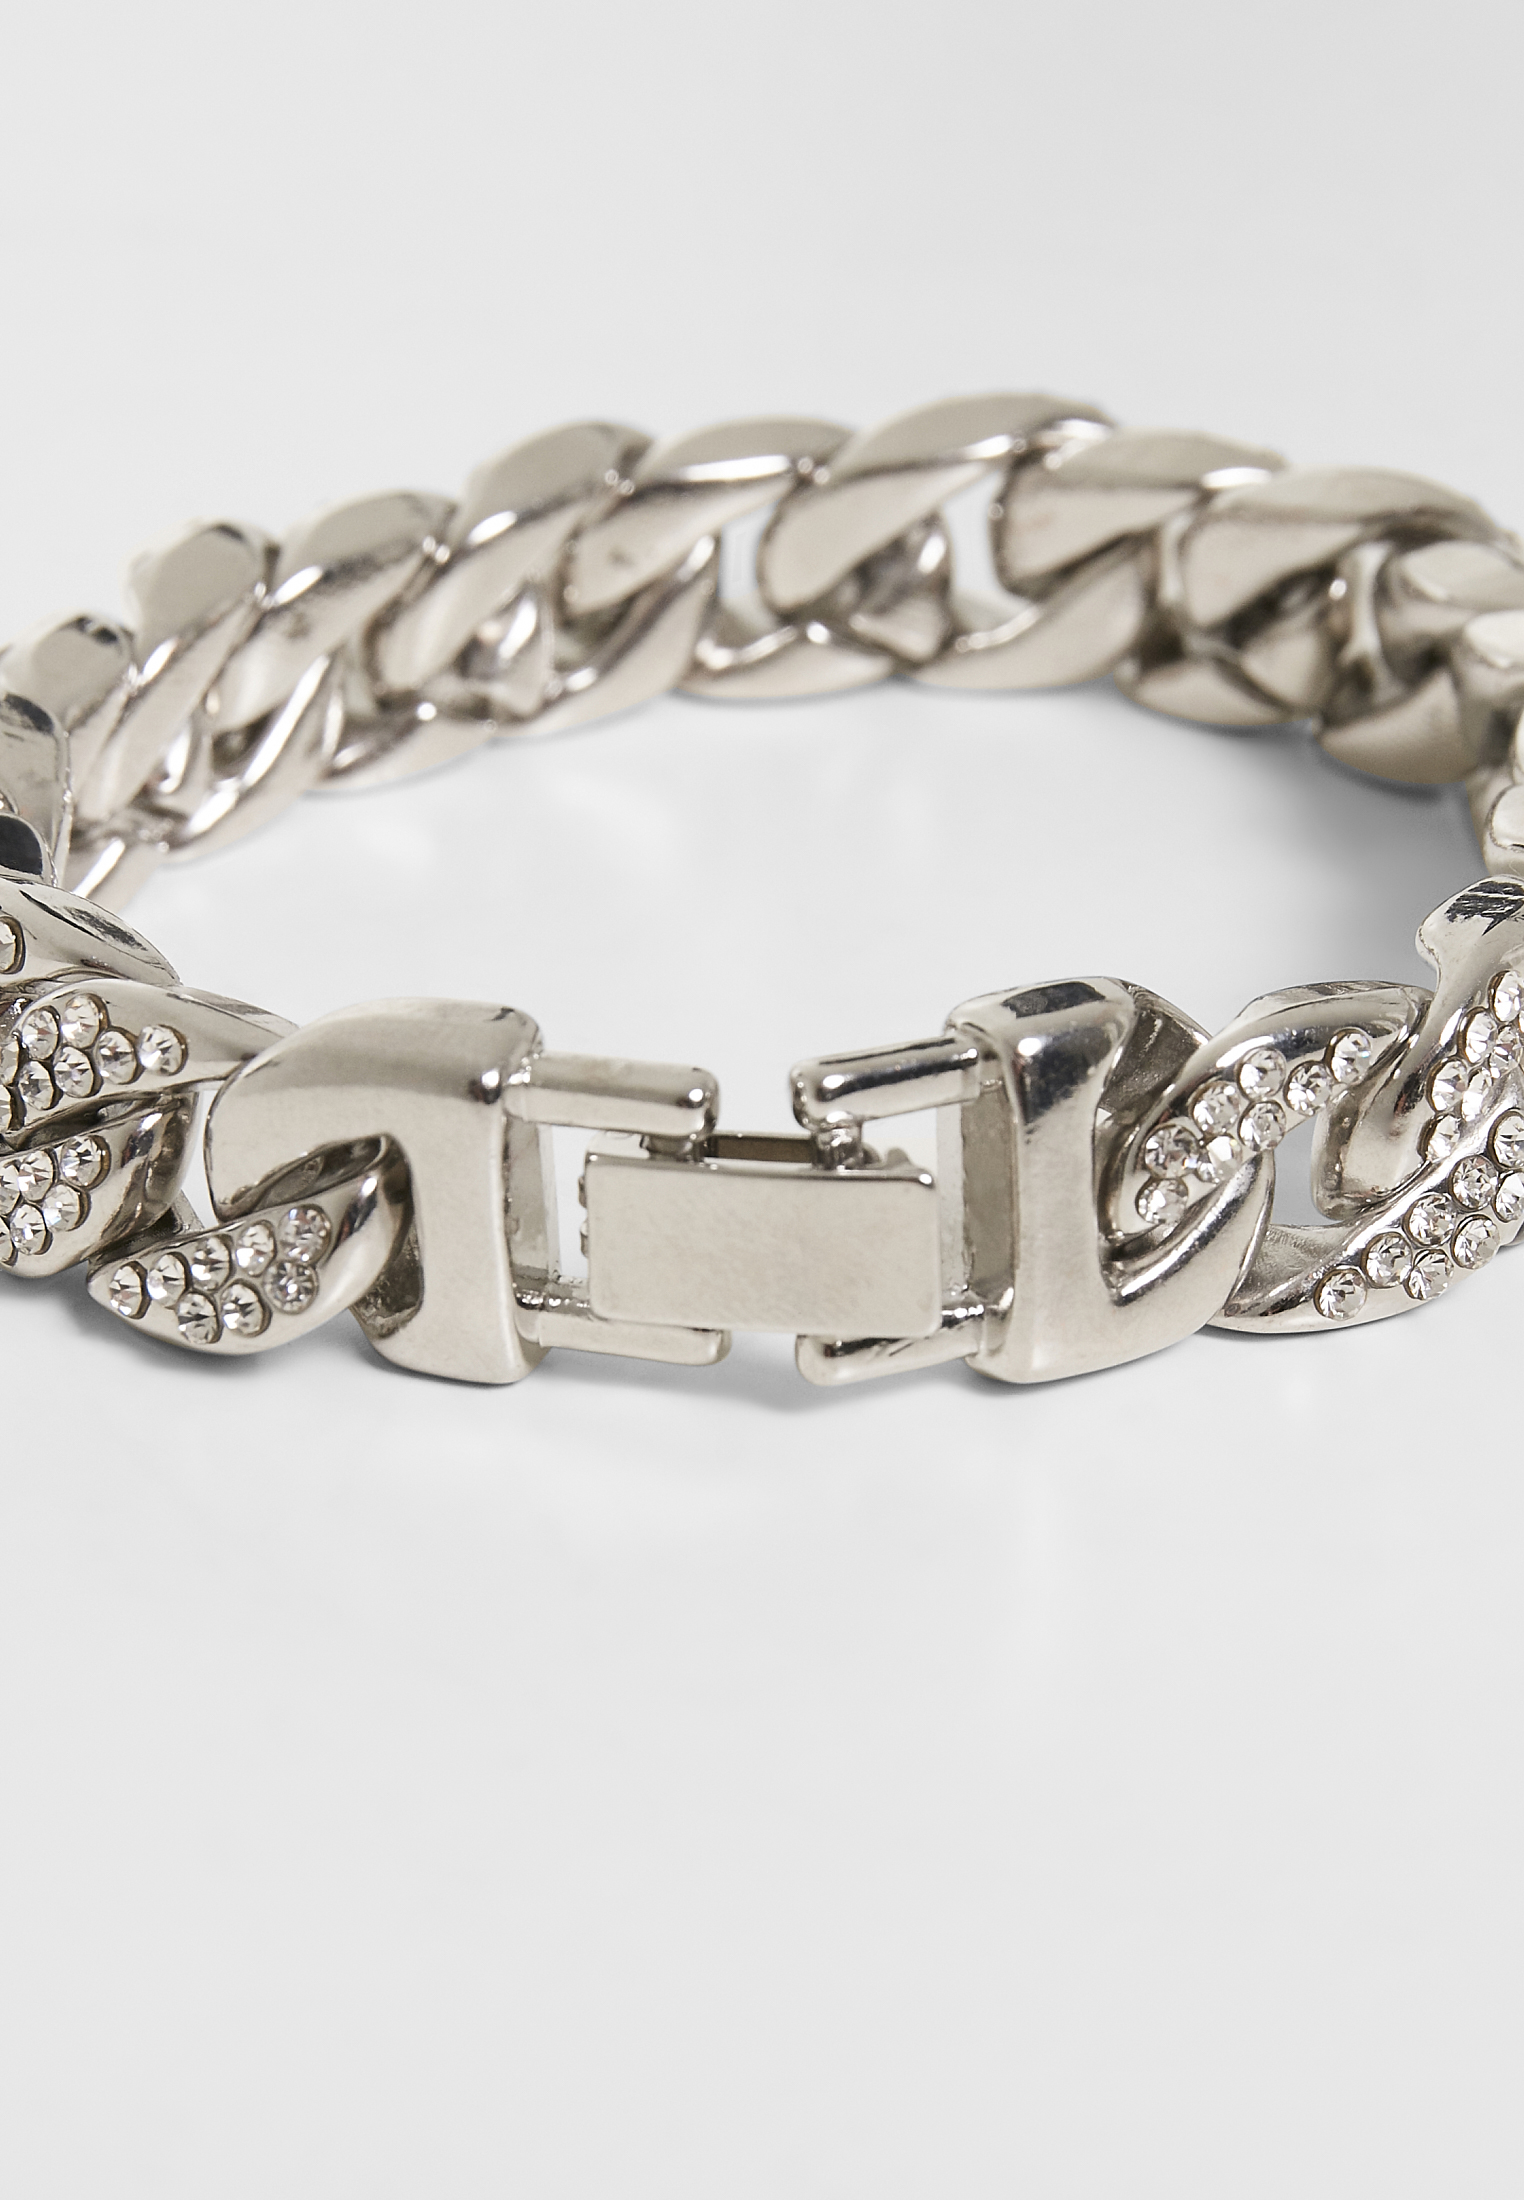 Schmuck Big Bracelet With Stones in Farbe silver